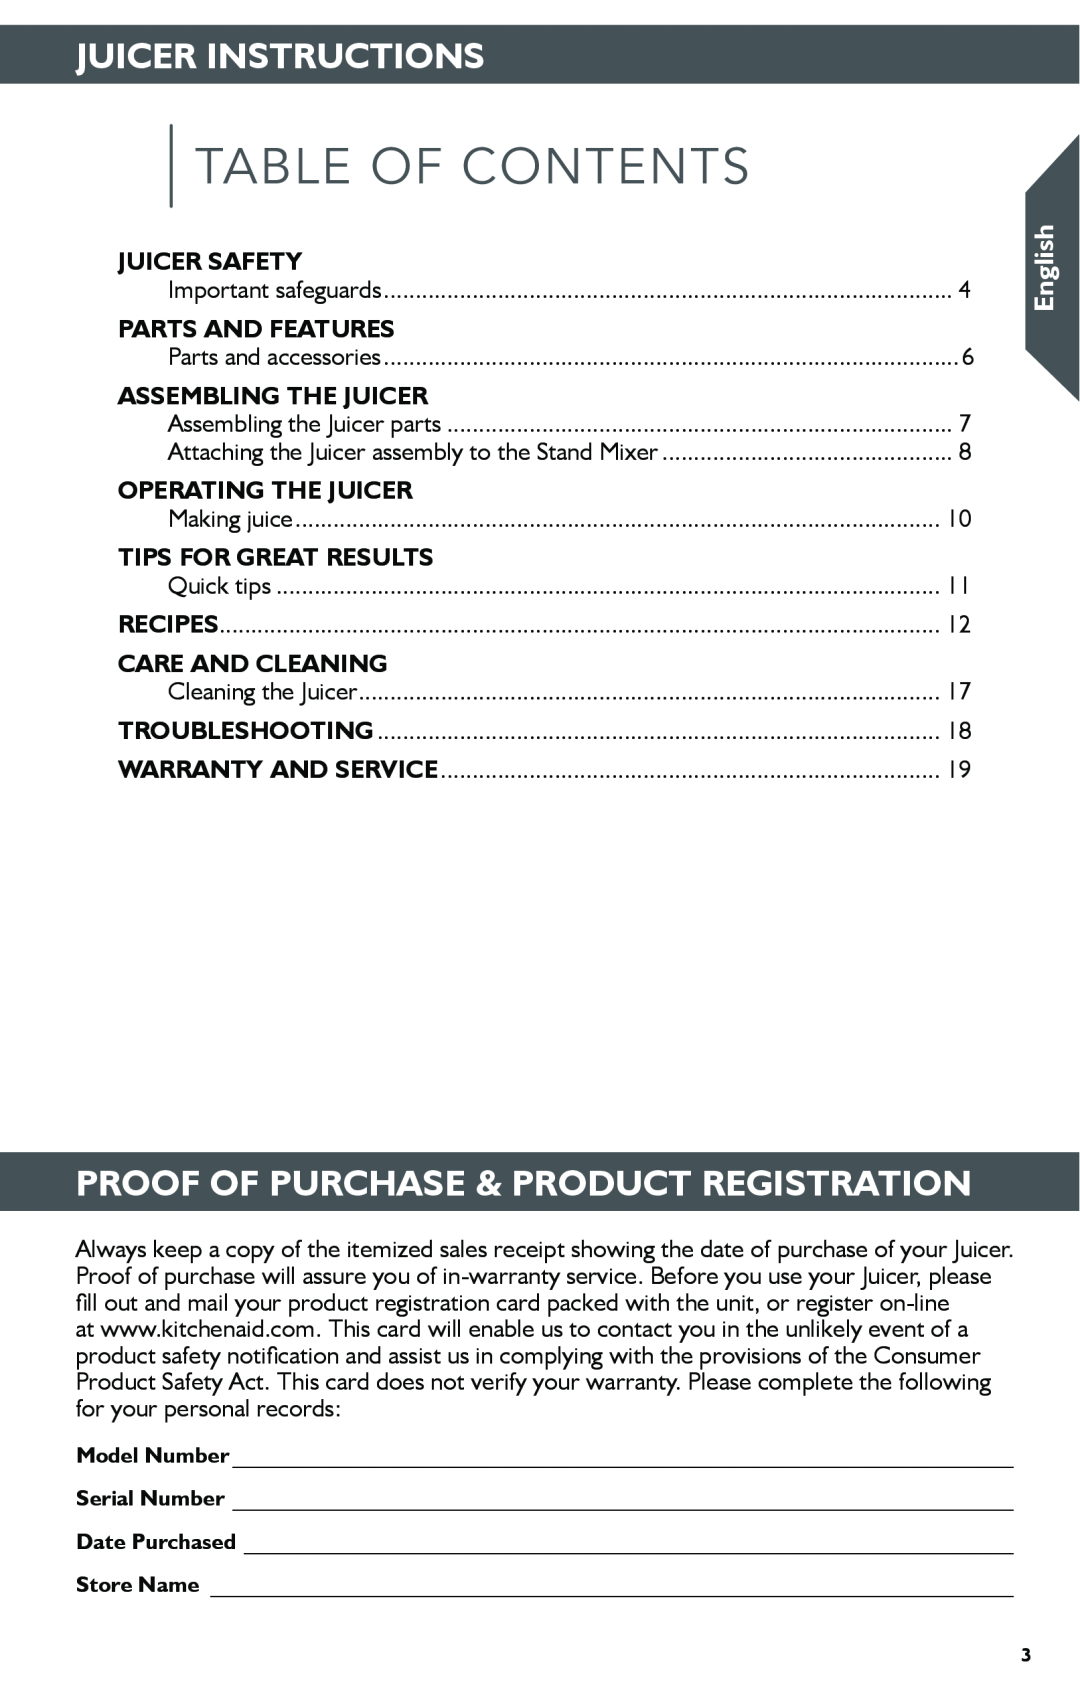 KitchenAid KSN1JA manual Juicer Instructions, Proof Of Purchase & Product Registration, English, Juicer Safety, Quick tips 